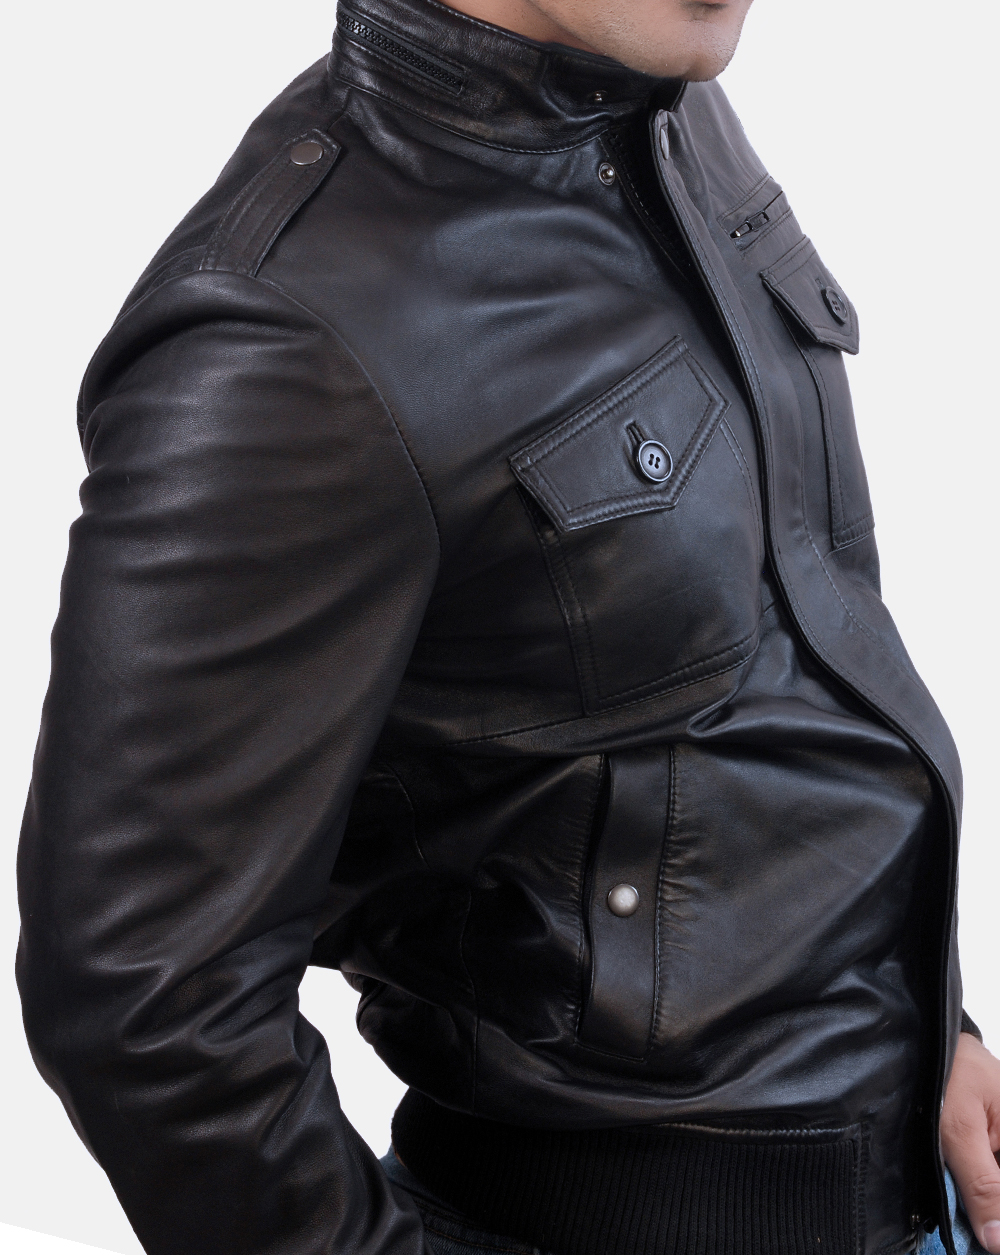 Buy California Leather Jacket